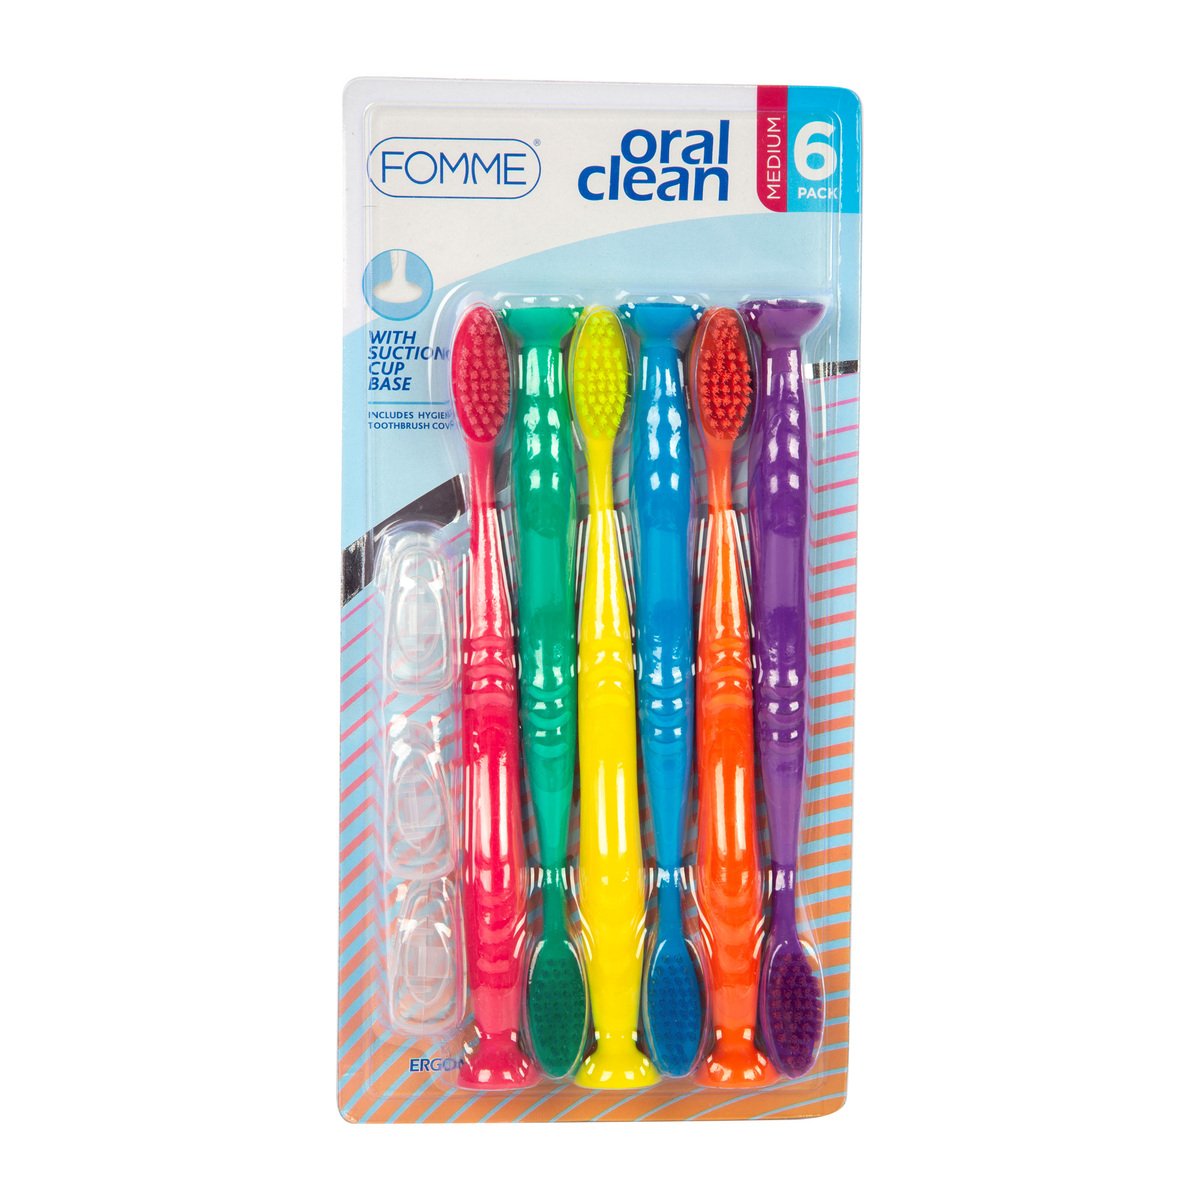 Fomme Oral Clean Medium Toothbrush 6 pcs